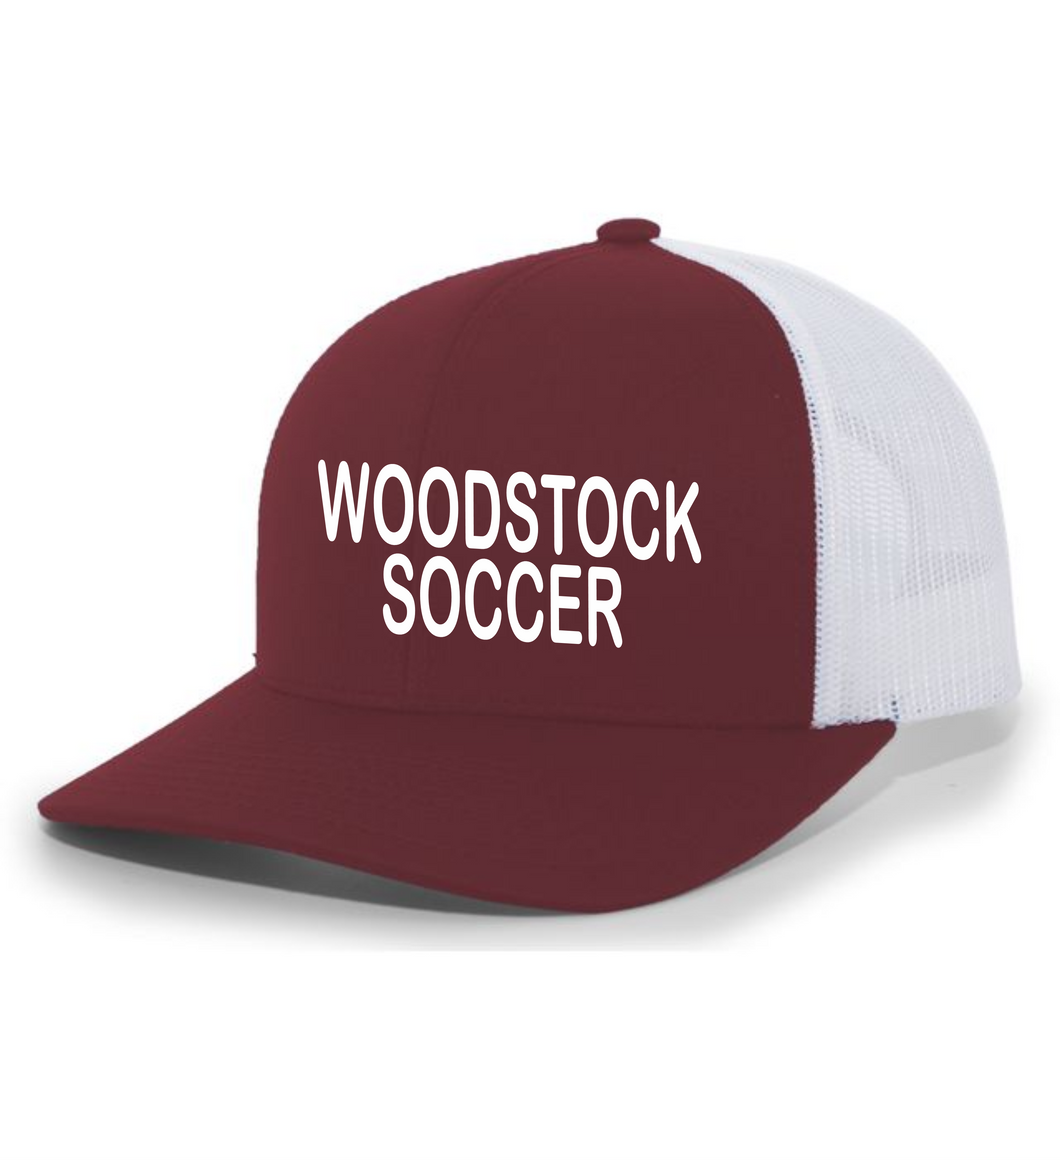 WW-SOC-921 - Pacific Trucker Snapback Cap - Woodstock Soccer Logo